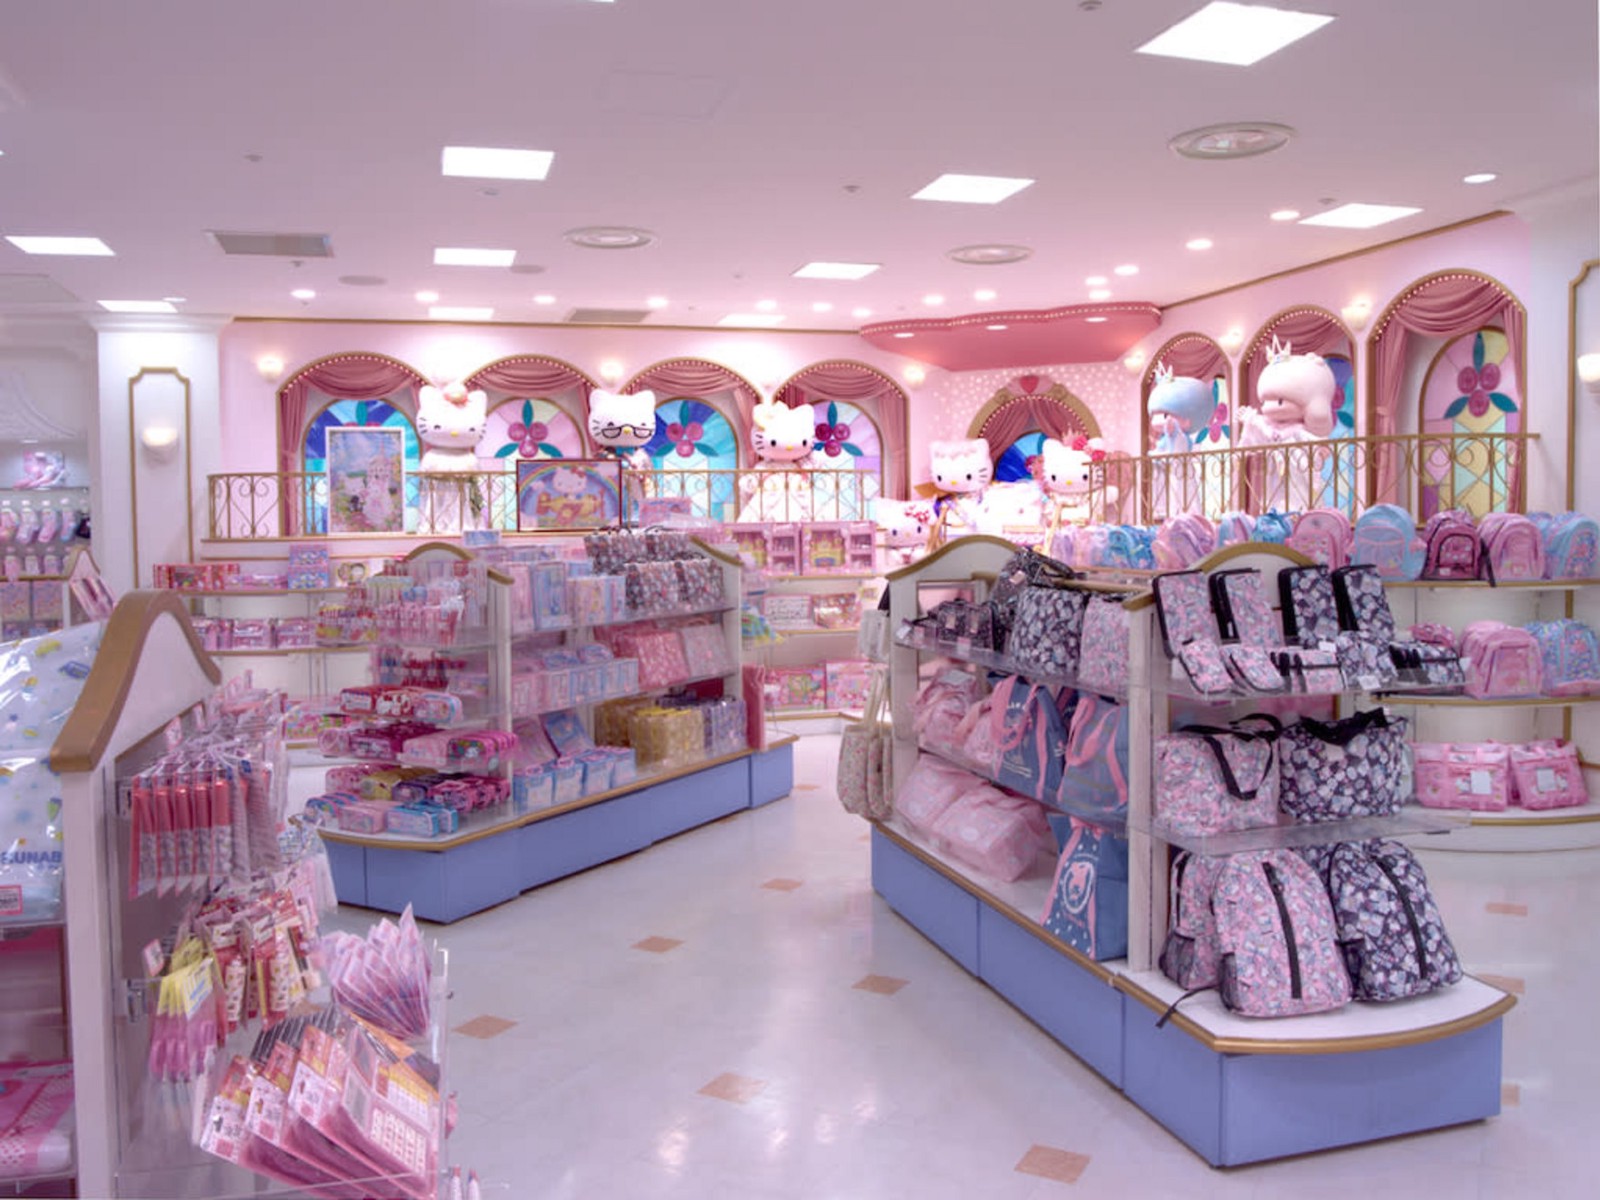 Sanrio Hello Kitty Tote Bag Tokyo Shibuya Hachiko edition japan | eBay